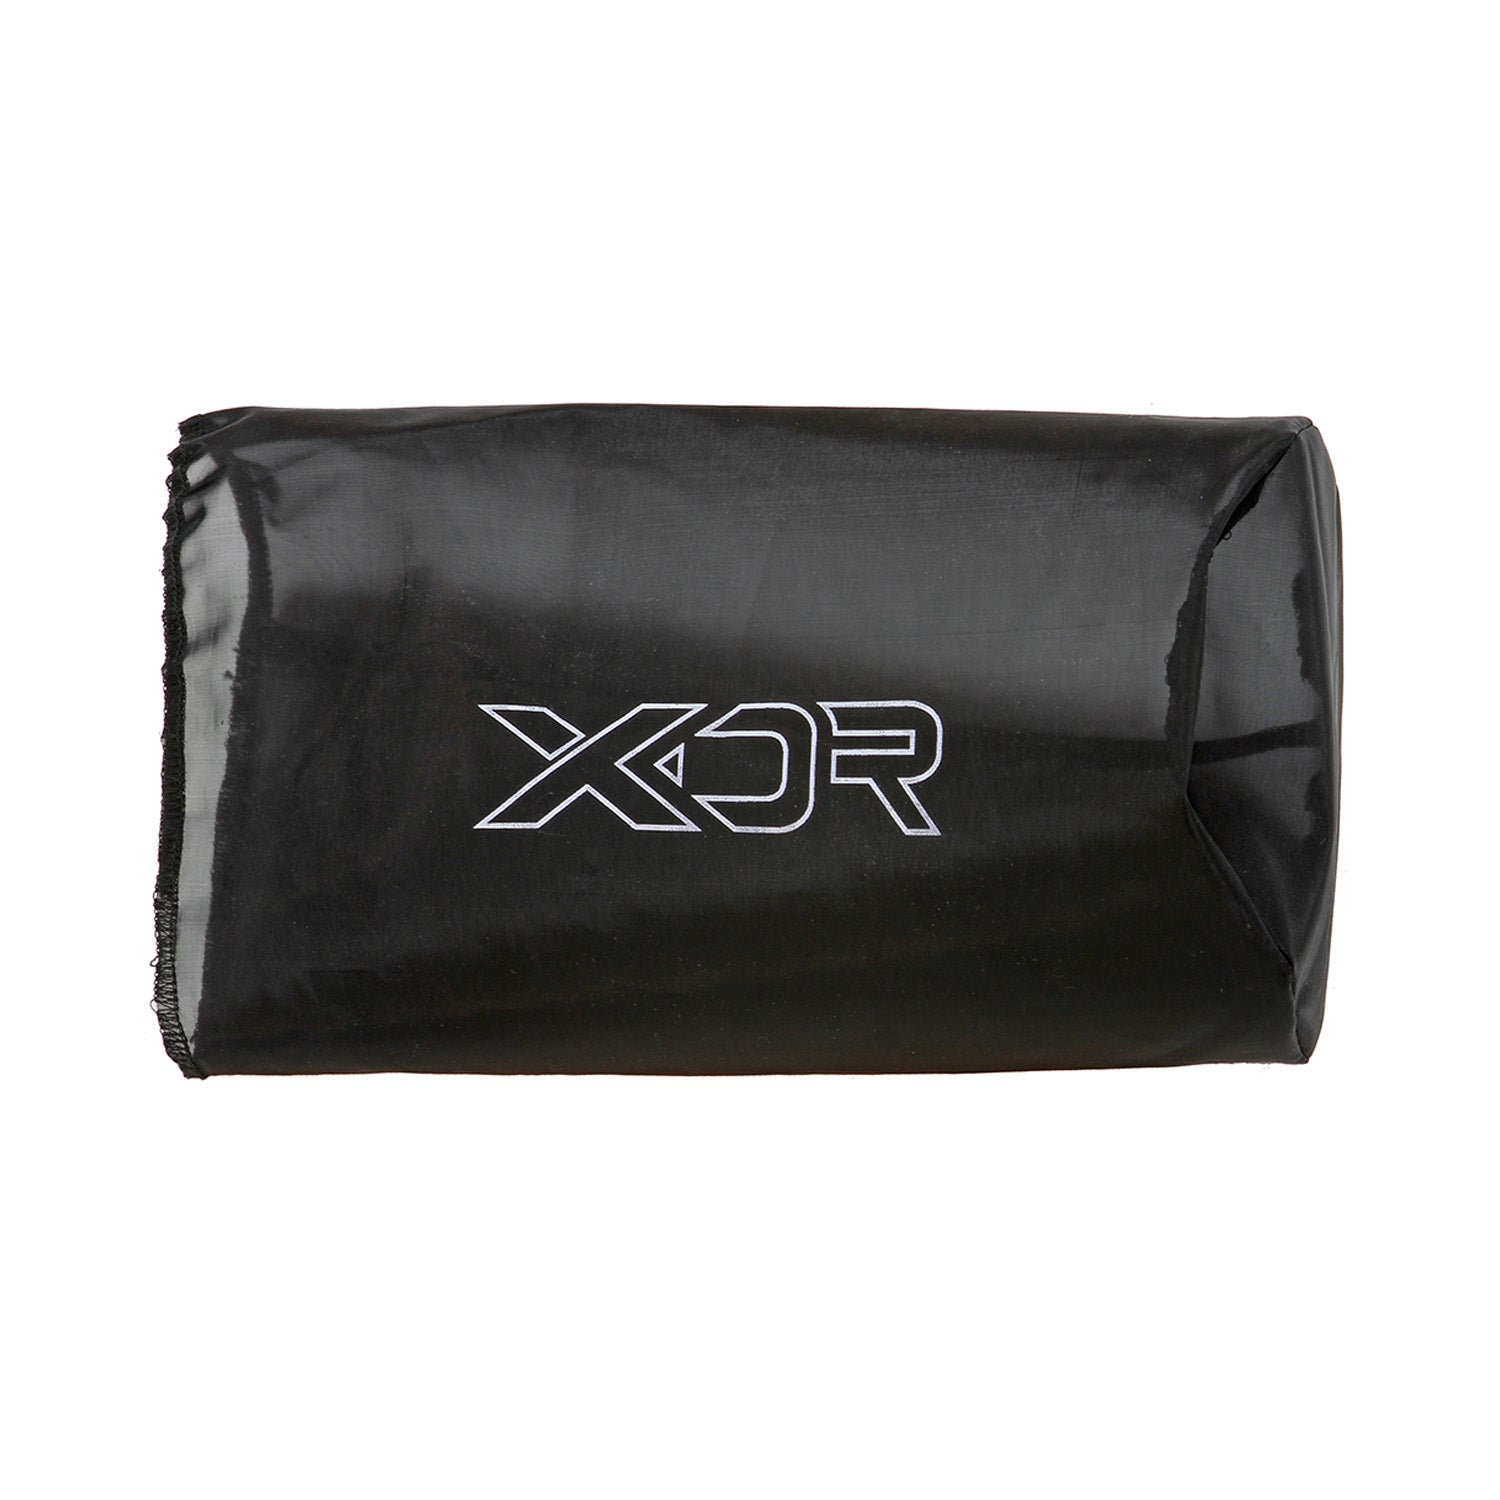 XDR Polaris Air Filter